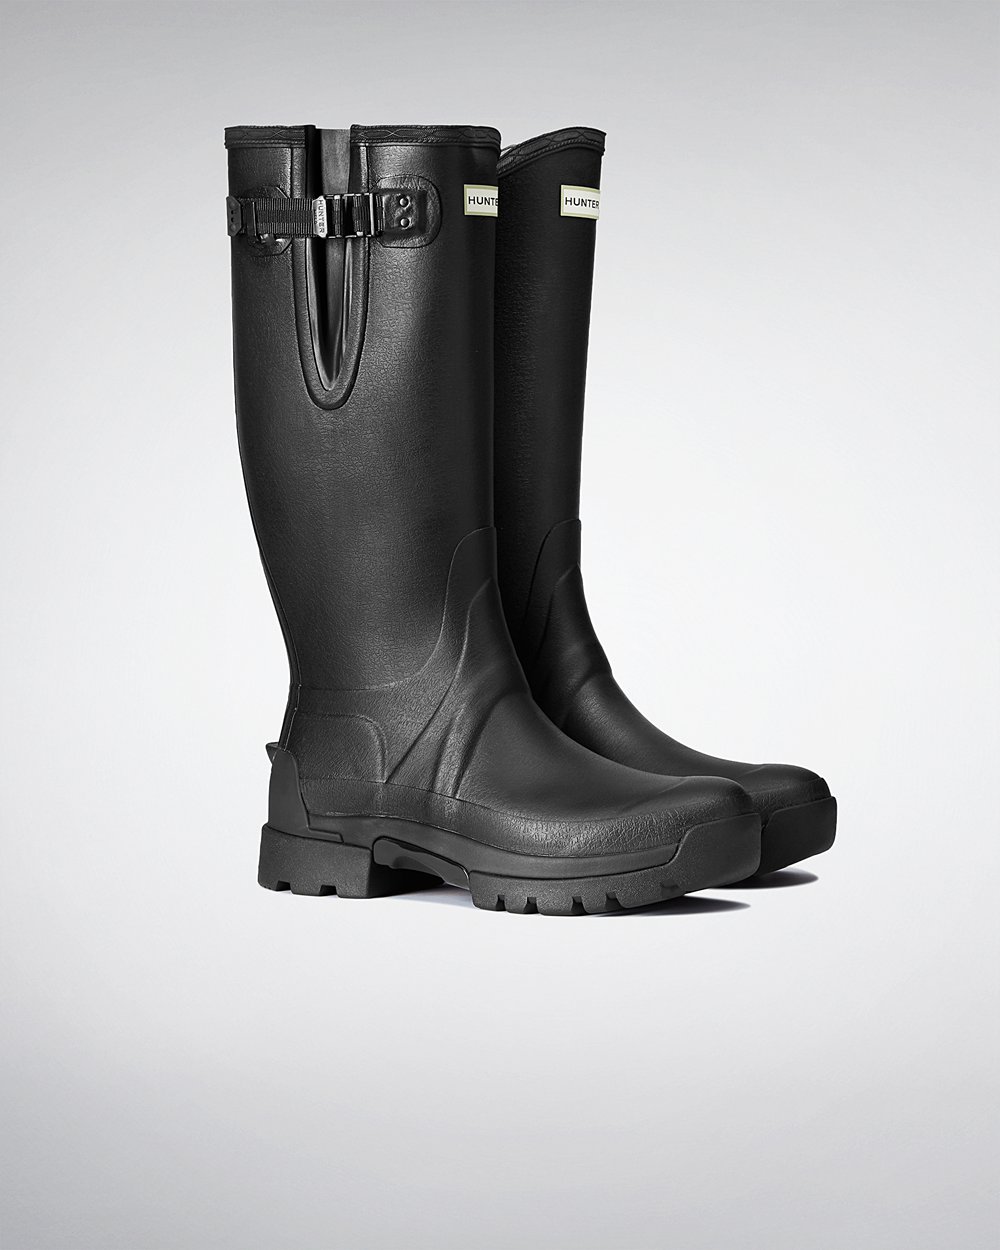 Mens Tall Rain Boots - Hunter Balmoral Adjustable 3Mm Neoprene (97PTVOHZI) - Black